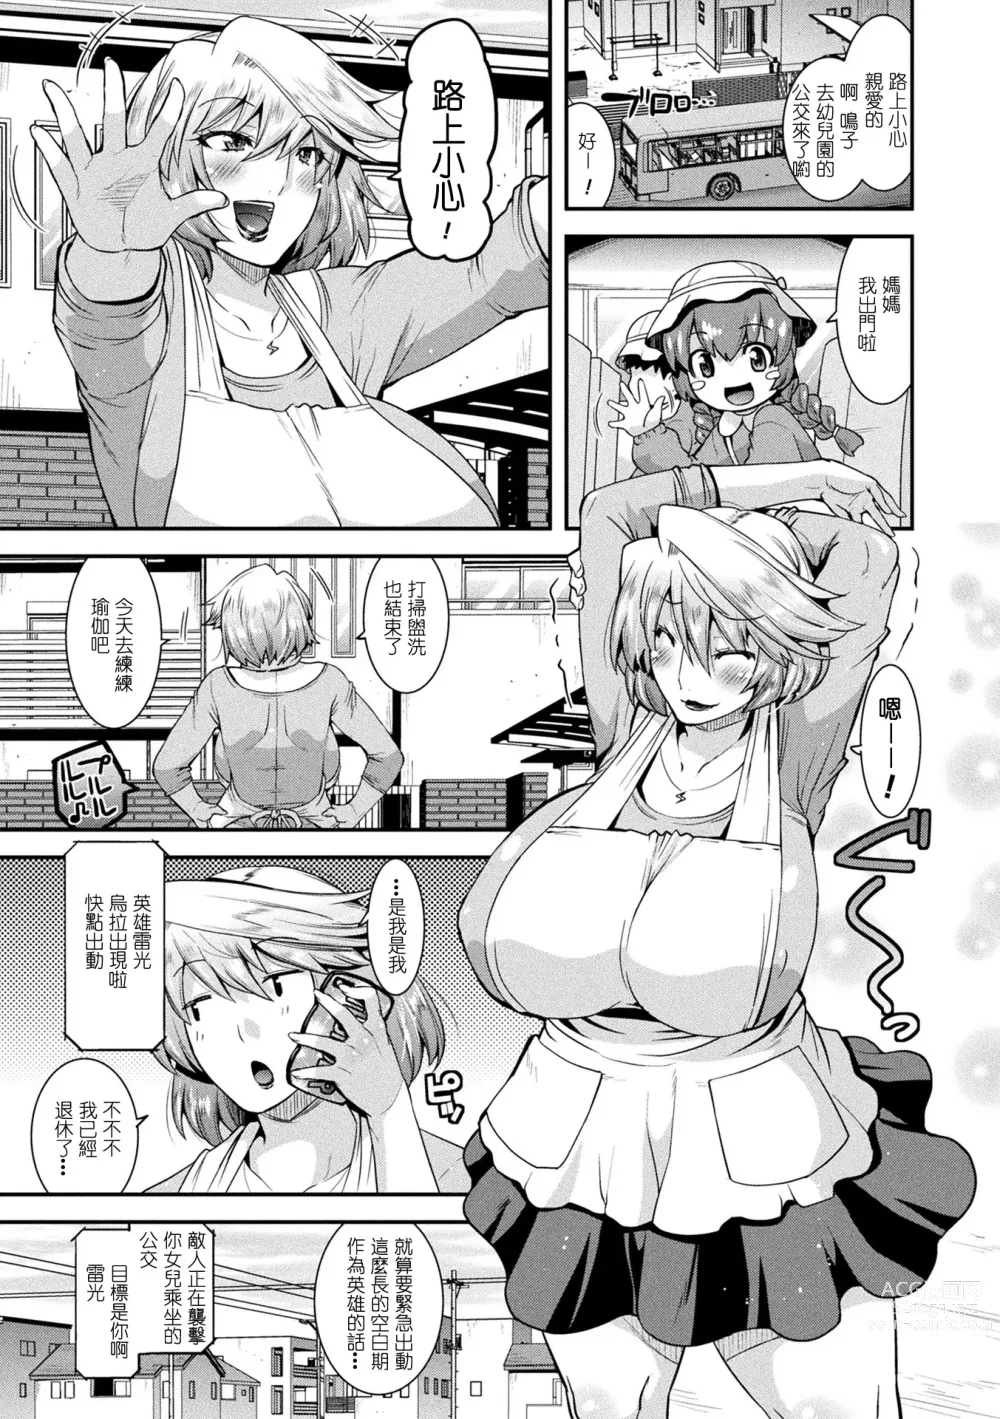 Page 23 of manga Harami Otsu Ikusa Otome